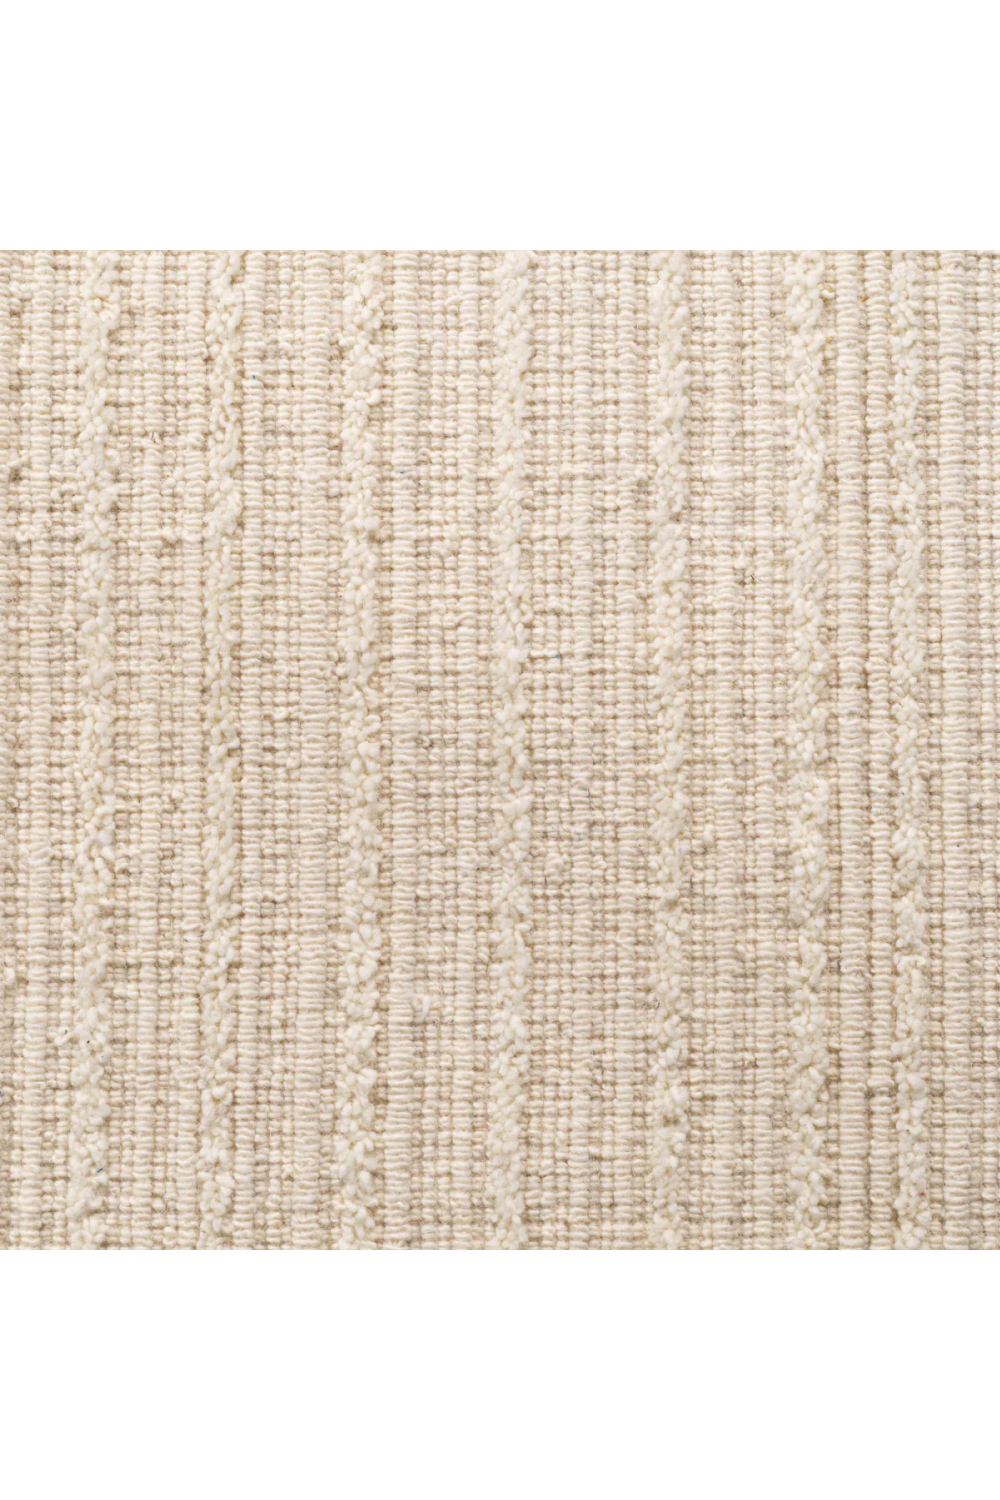 Ivory Wool Carpet 6'5 x 10' | Eichholtz Torrance | Oroa.com